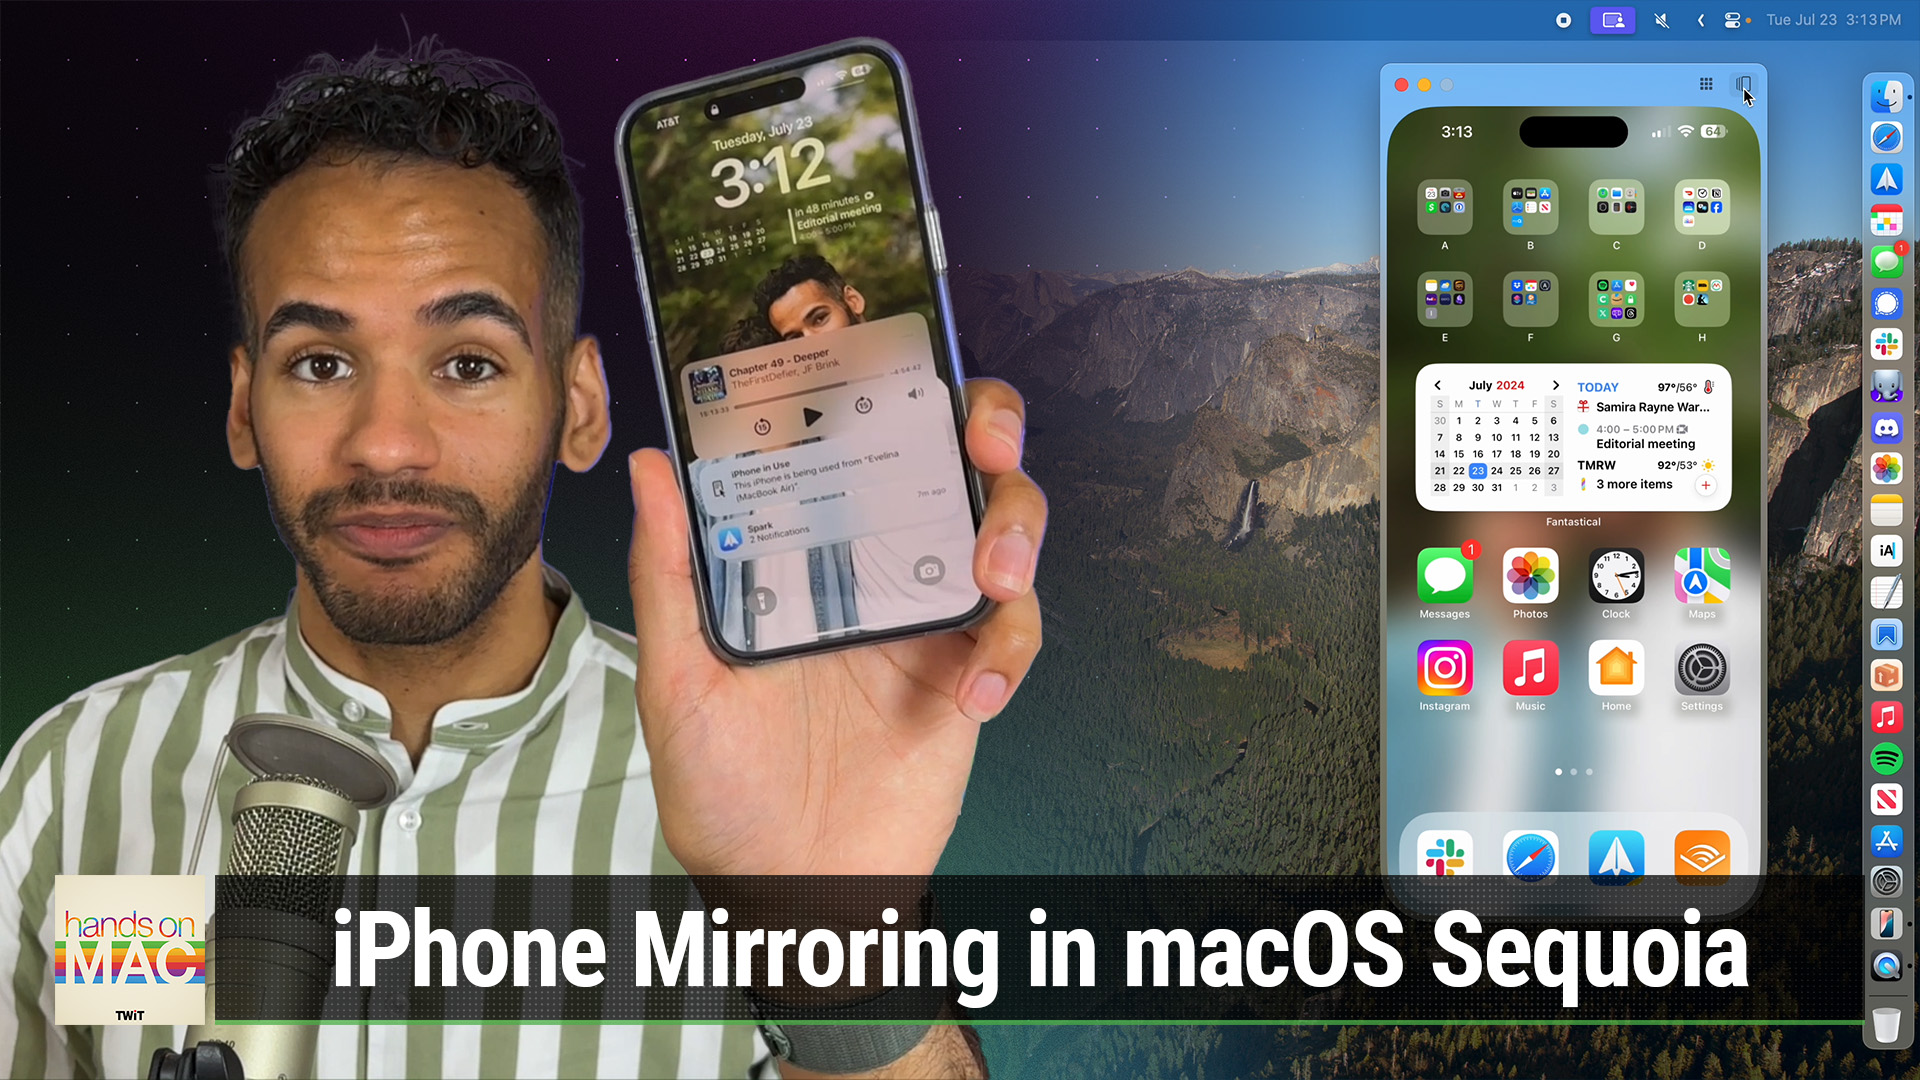 iPhone Mirroring in macOS Sequoia (Hands-On Mac #142)